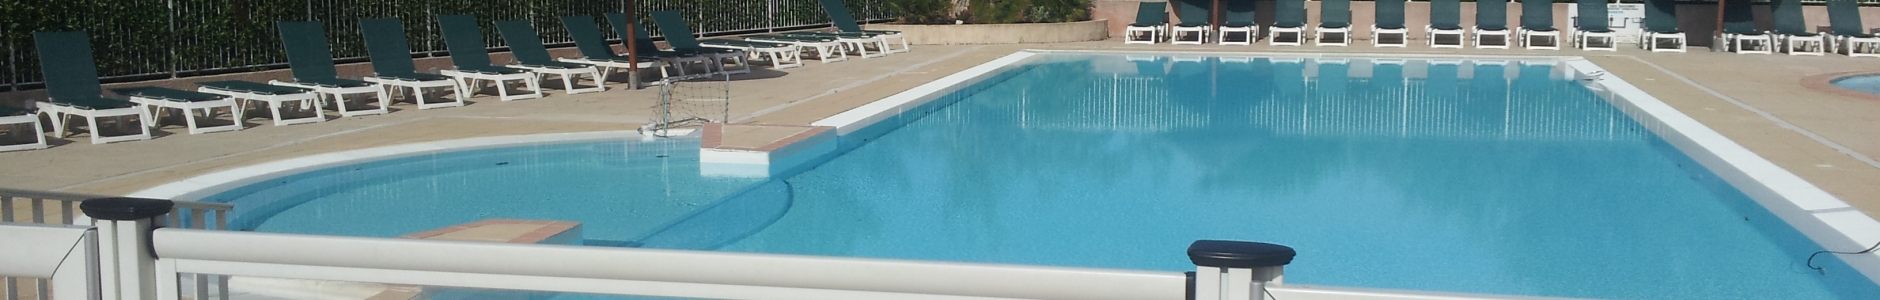 Rénovation piscine béton Gard